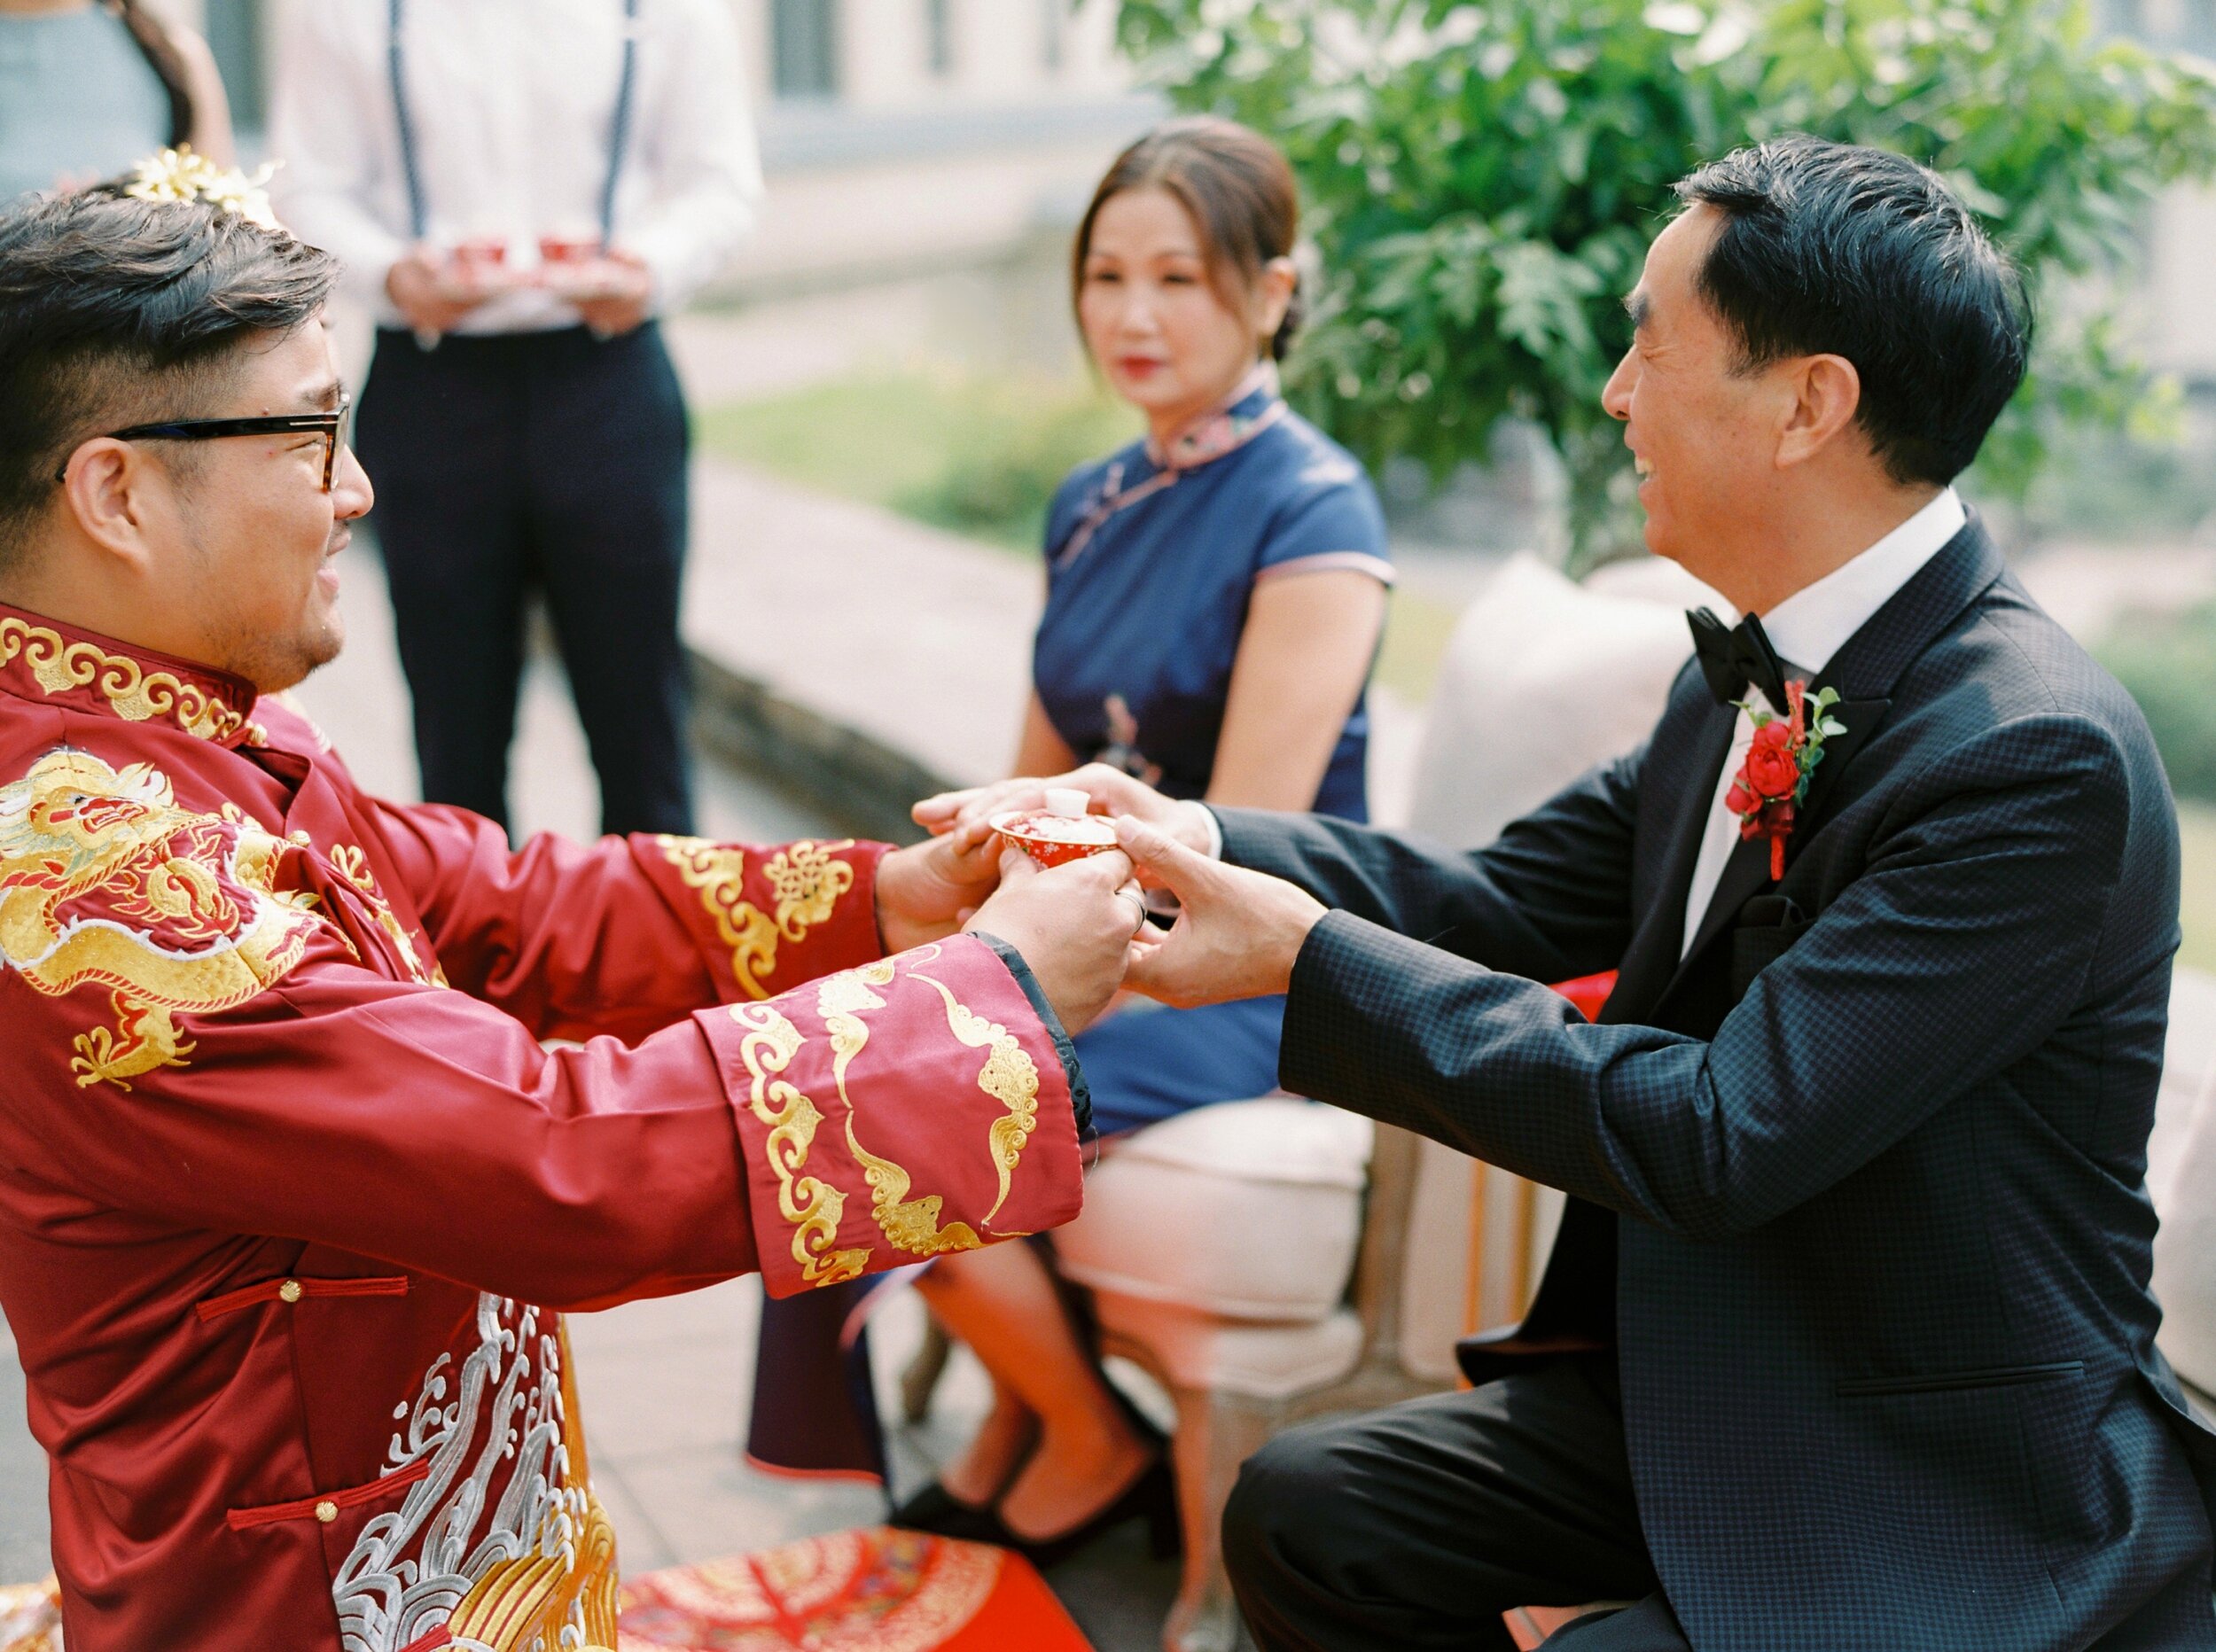  Lake Louise wedding photographers | Justine milton photography | fine art film destination wedding photographer | Chinese Tea Ceremony 